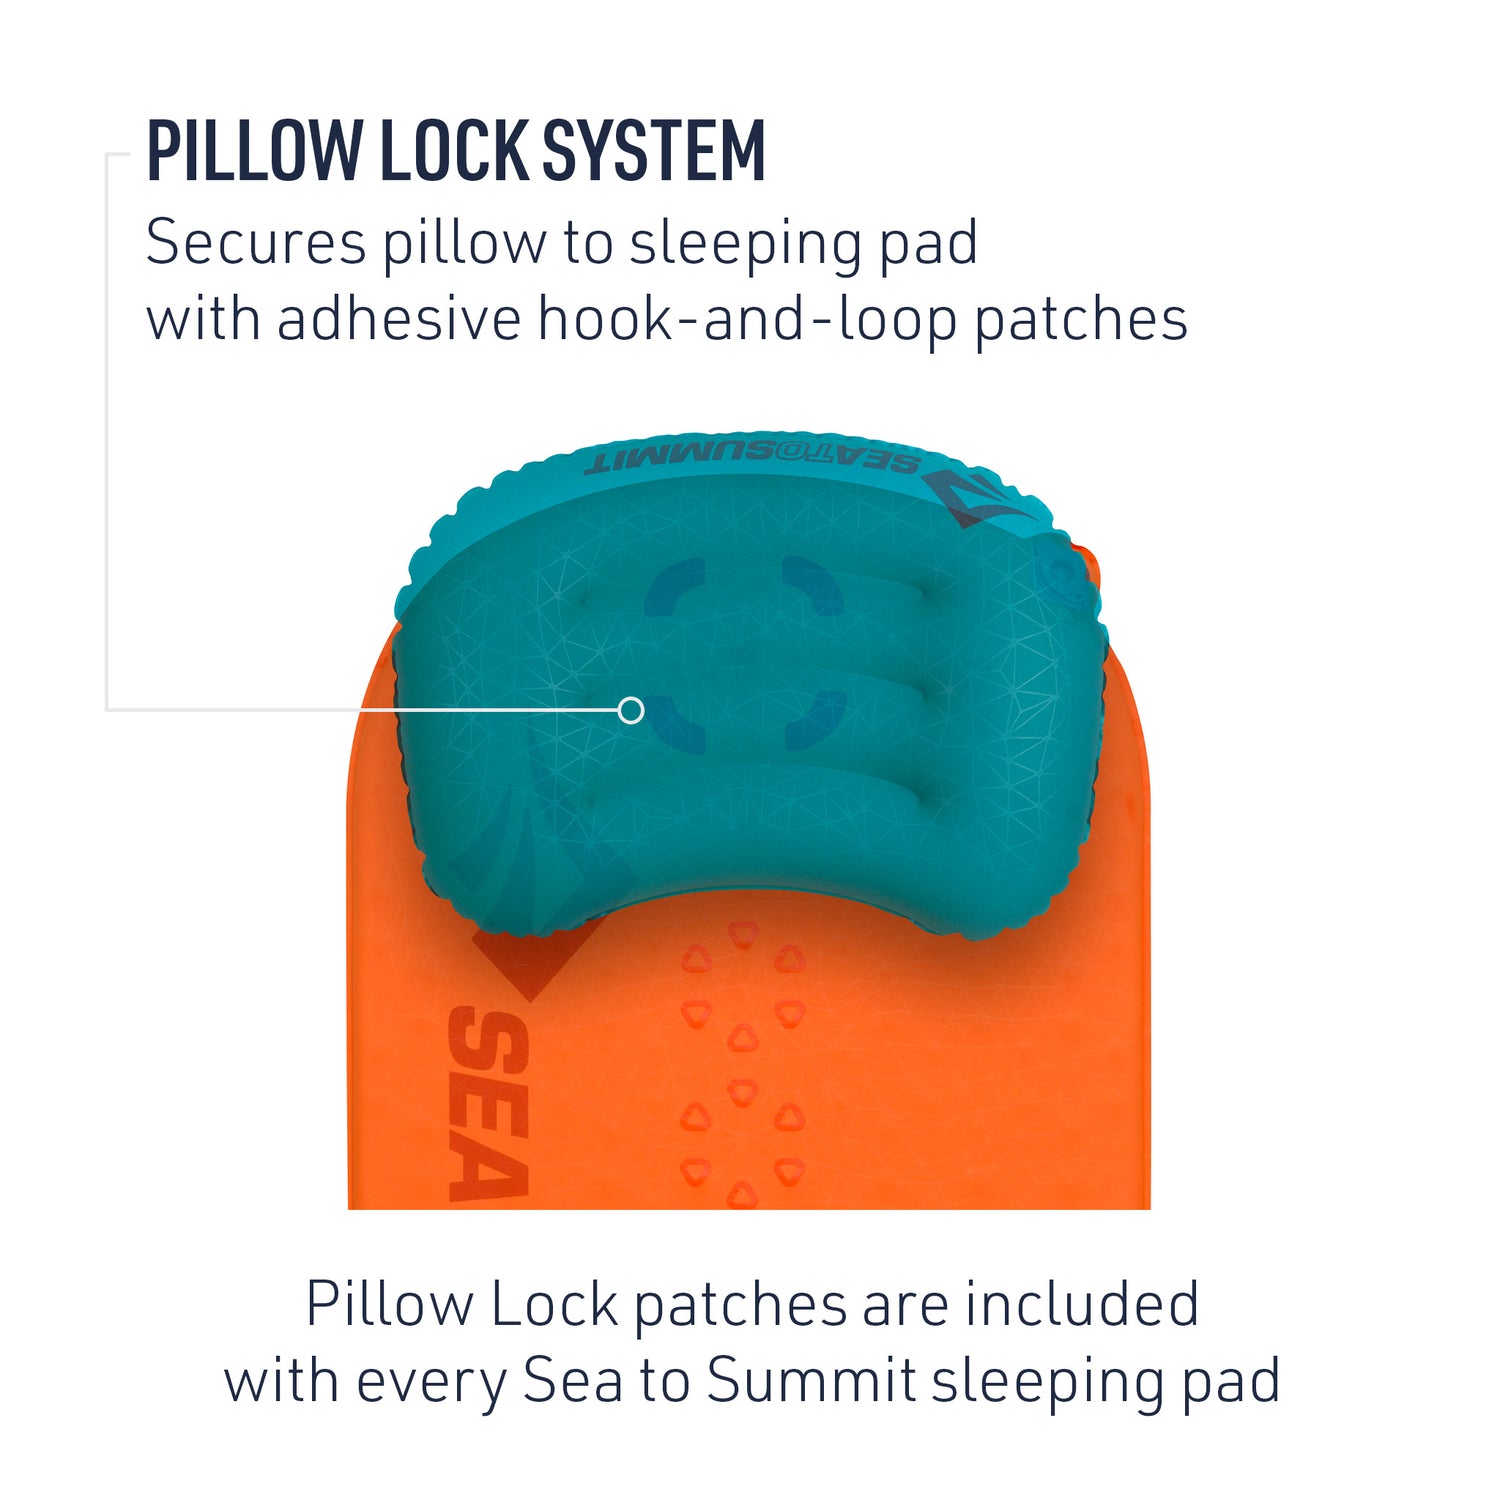 The Sea to Summit Sleep Systems